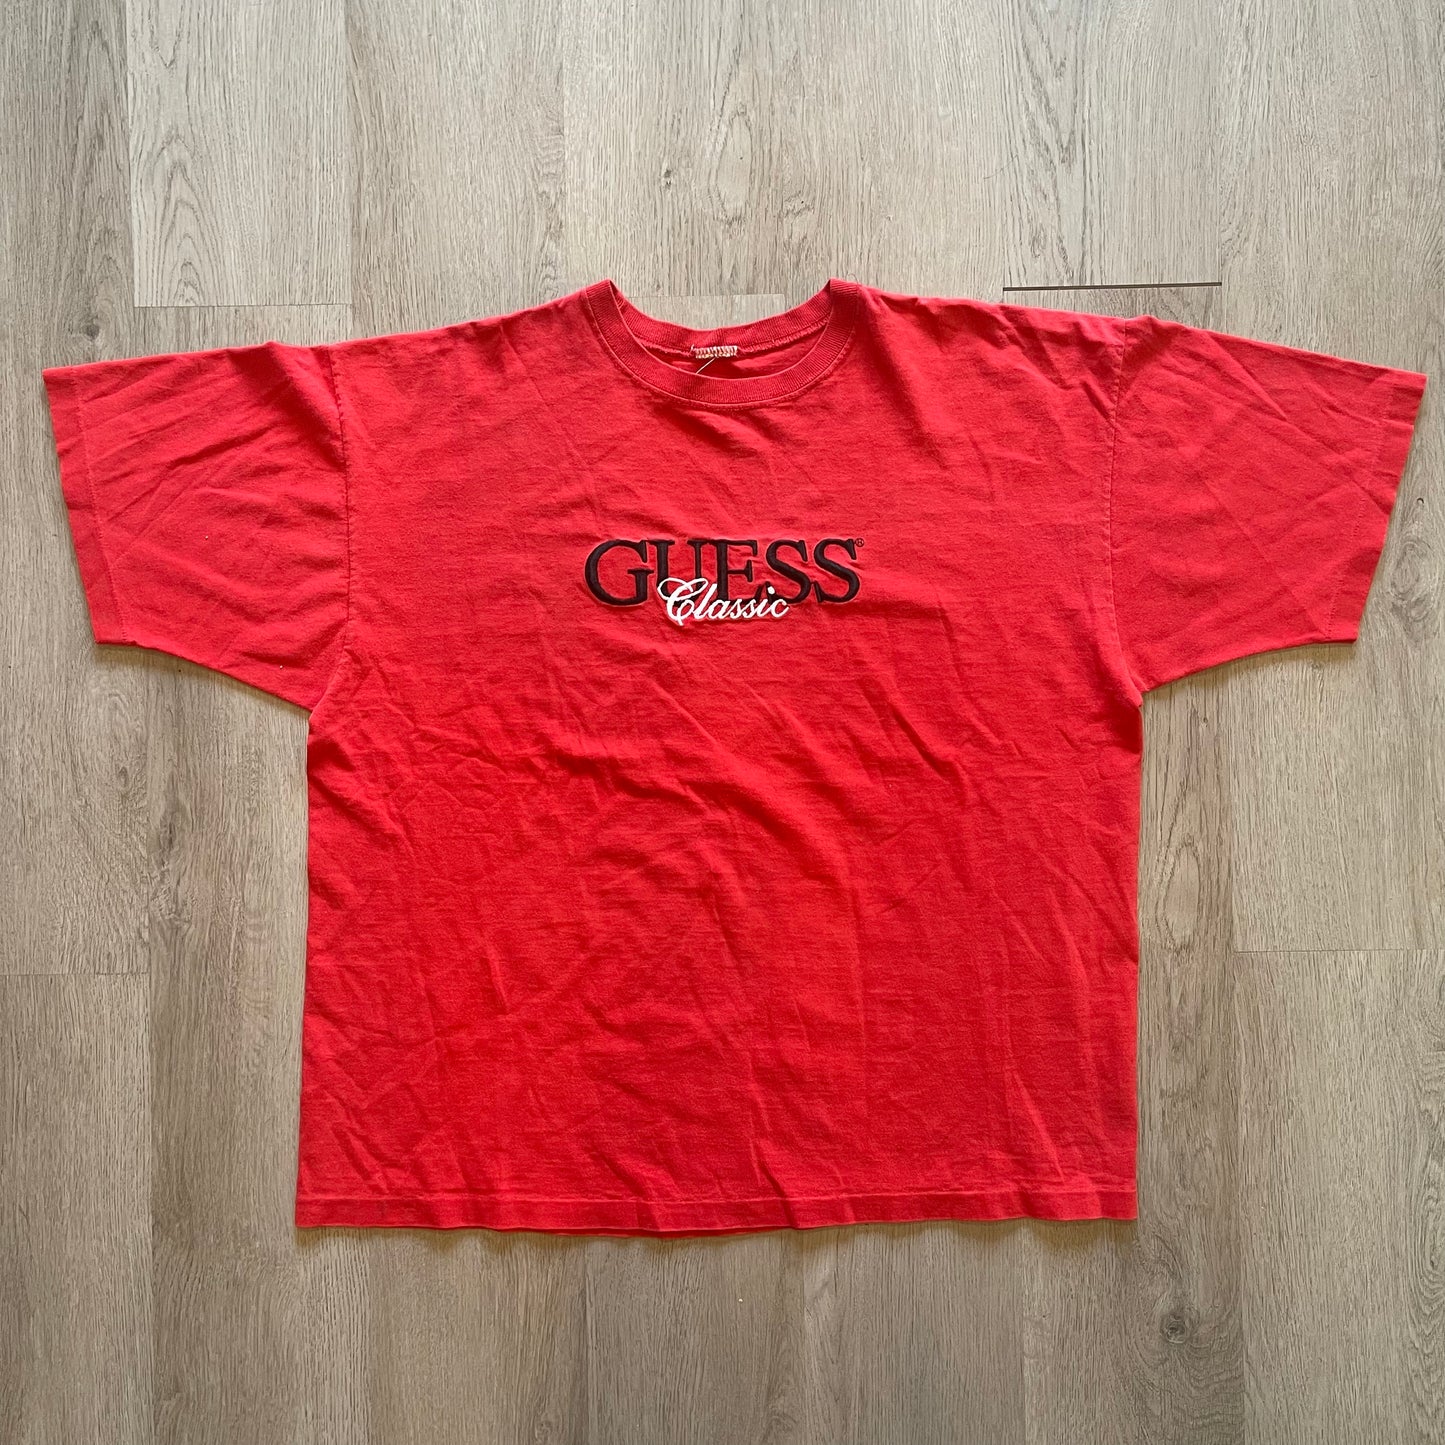 Vintage Guess Classic T-shirt